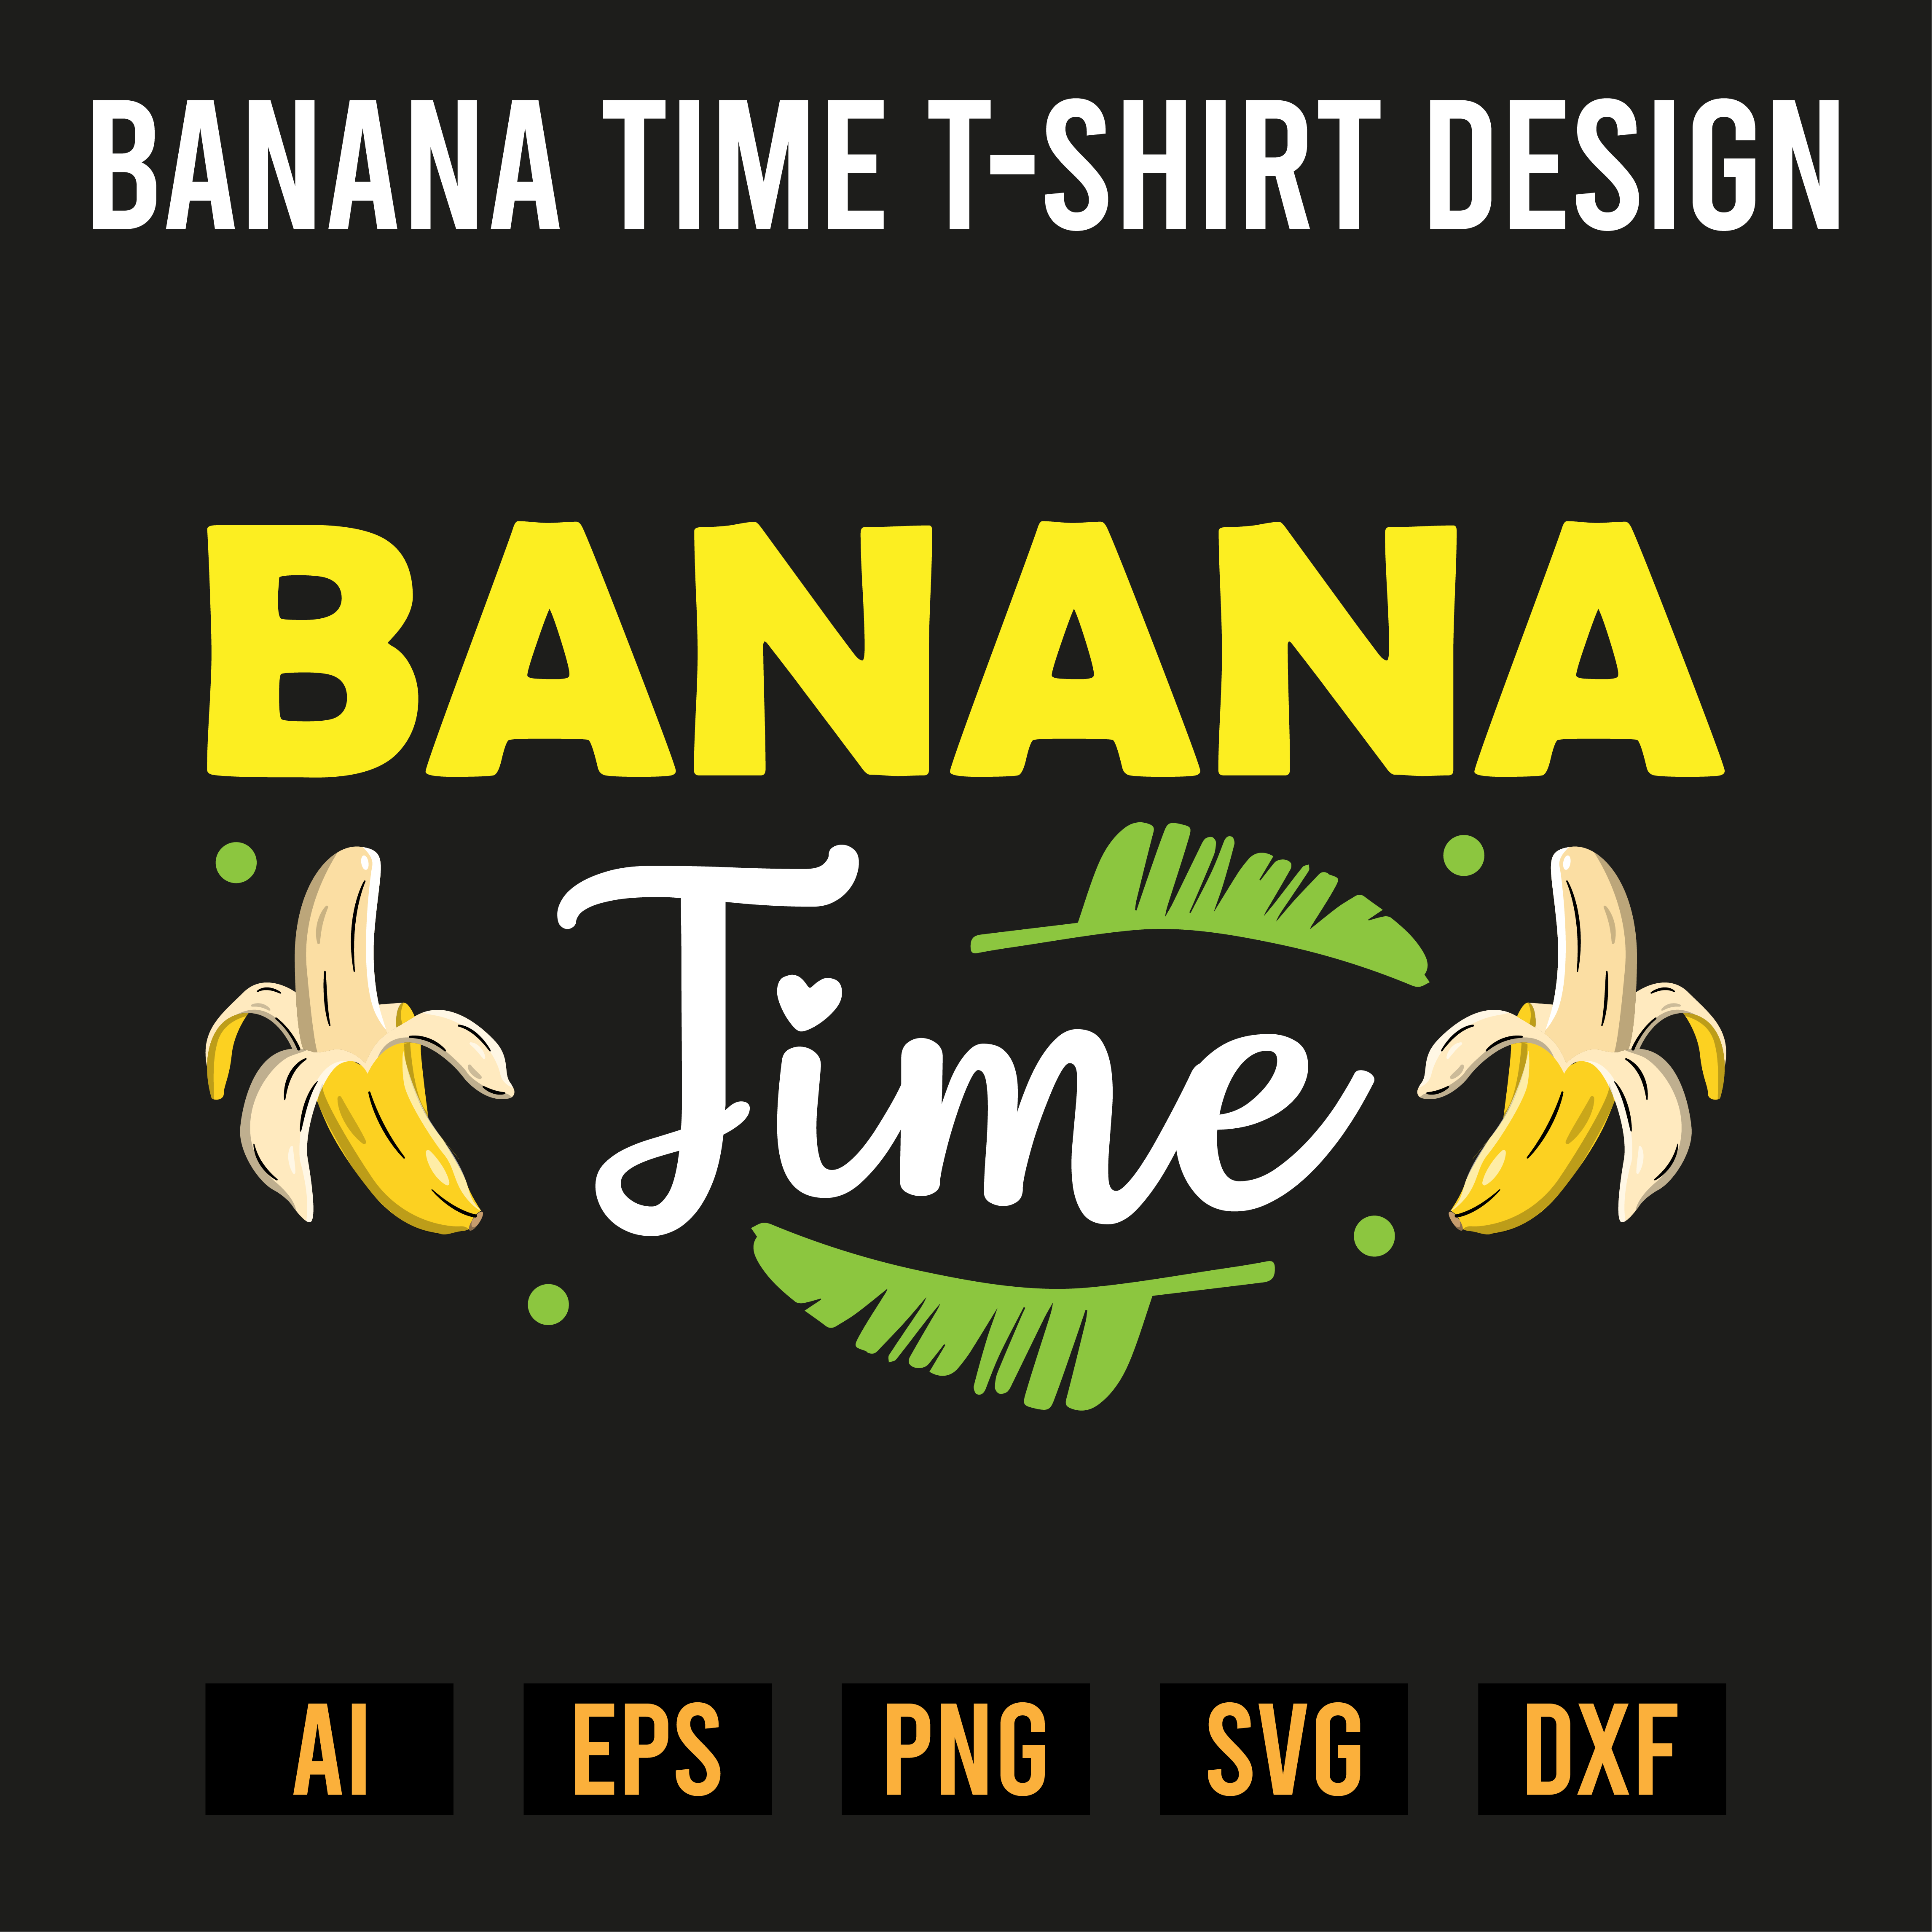 Banana Time T-Shirt Design preview image.